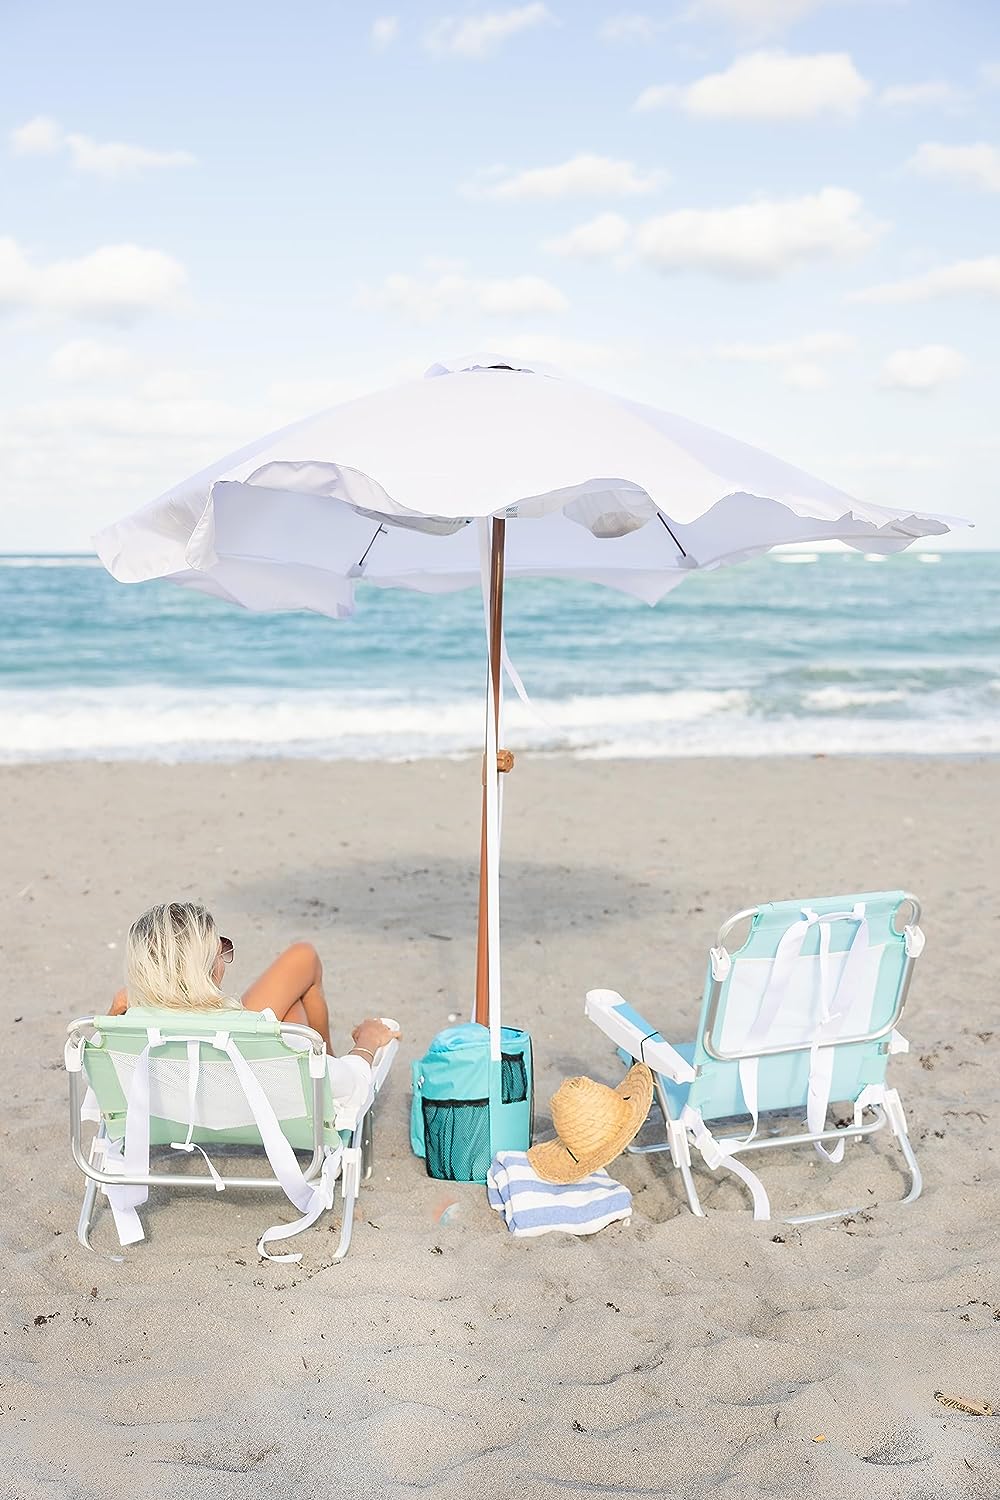 BUOY BEACH Lay Flat Beach Chair, Lightweight and Sturdy Design - Teal